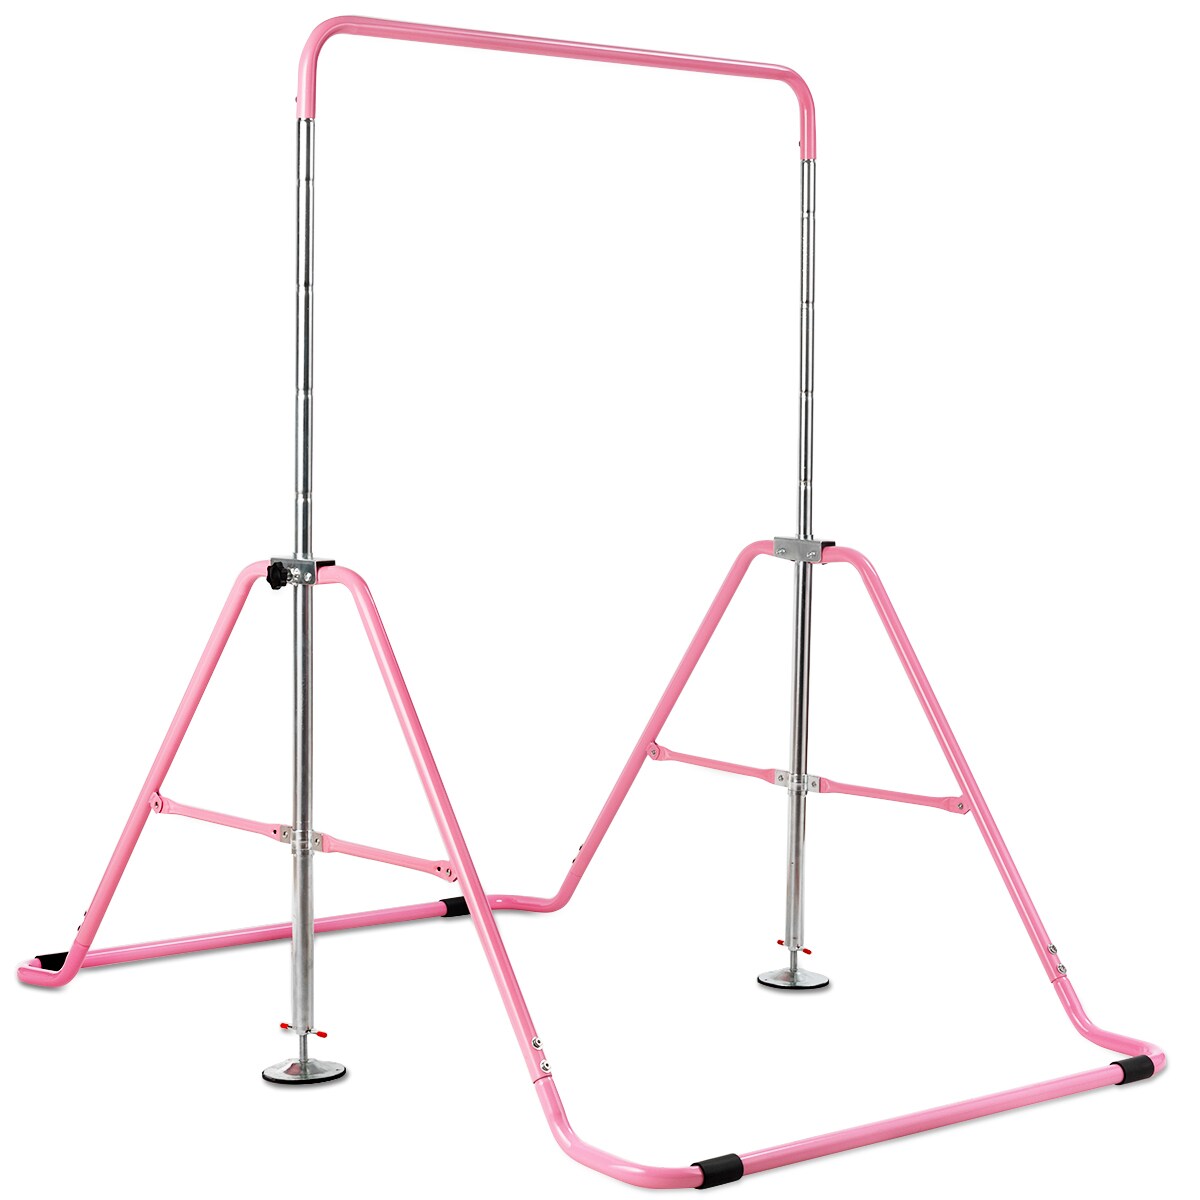 Adjustable Gymnastics Junior Training Horizontal Bar Training 150lbs Equipment 